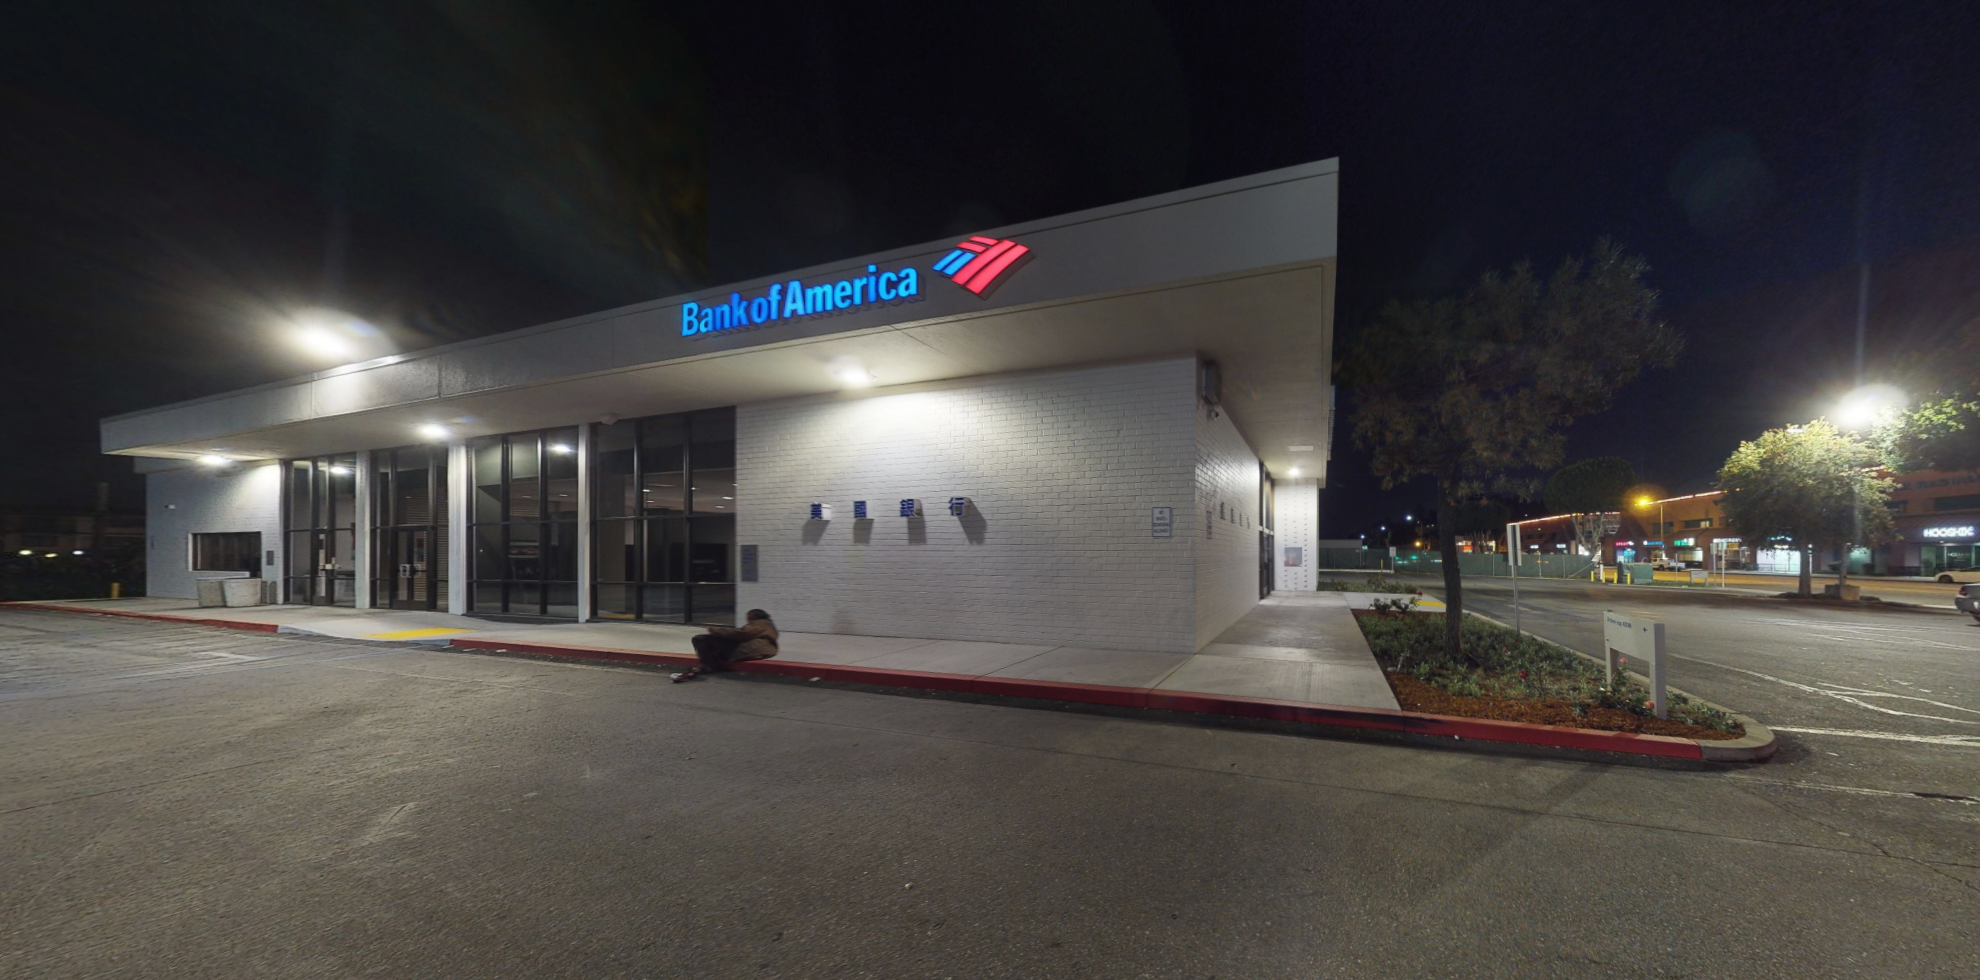 Bank of America financial center with drive-thru ATM | 300 N Atlantic Blvd, Monterey Park, CA 91754